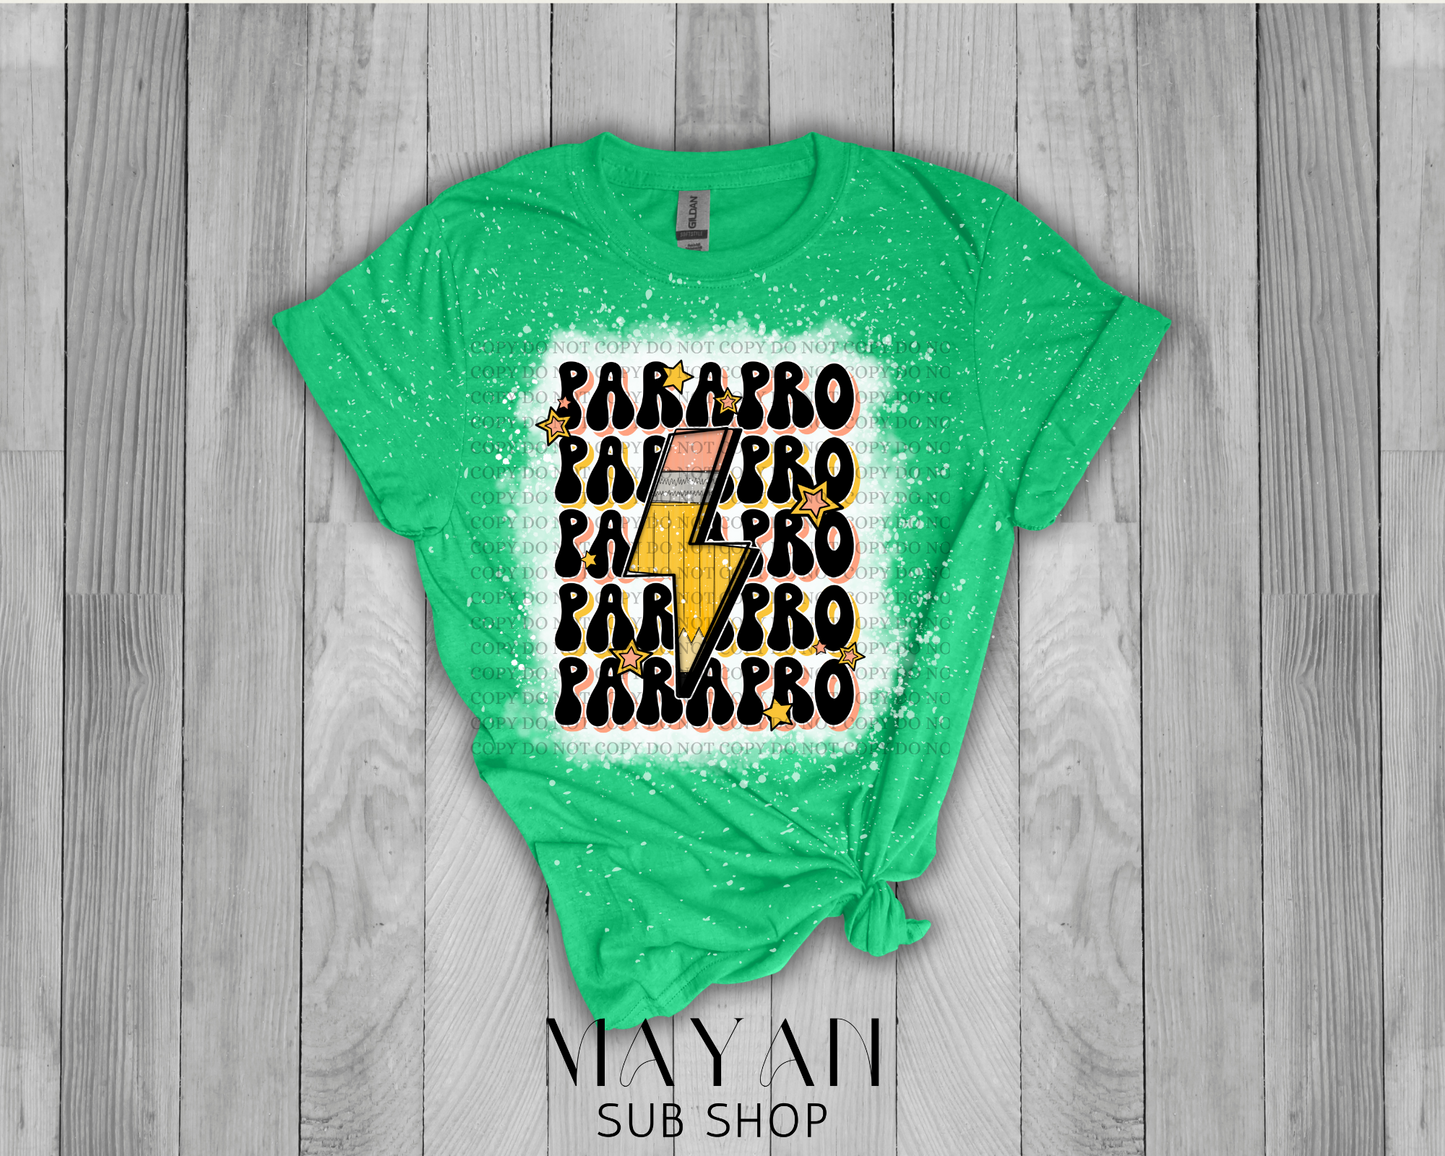 Parapro Retro Bleached Shirt - Mayan Sub Shop